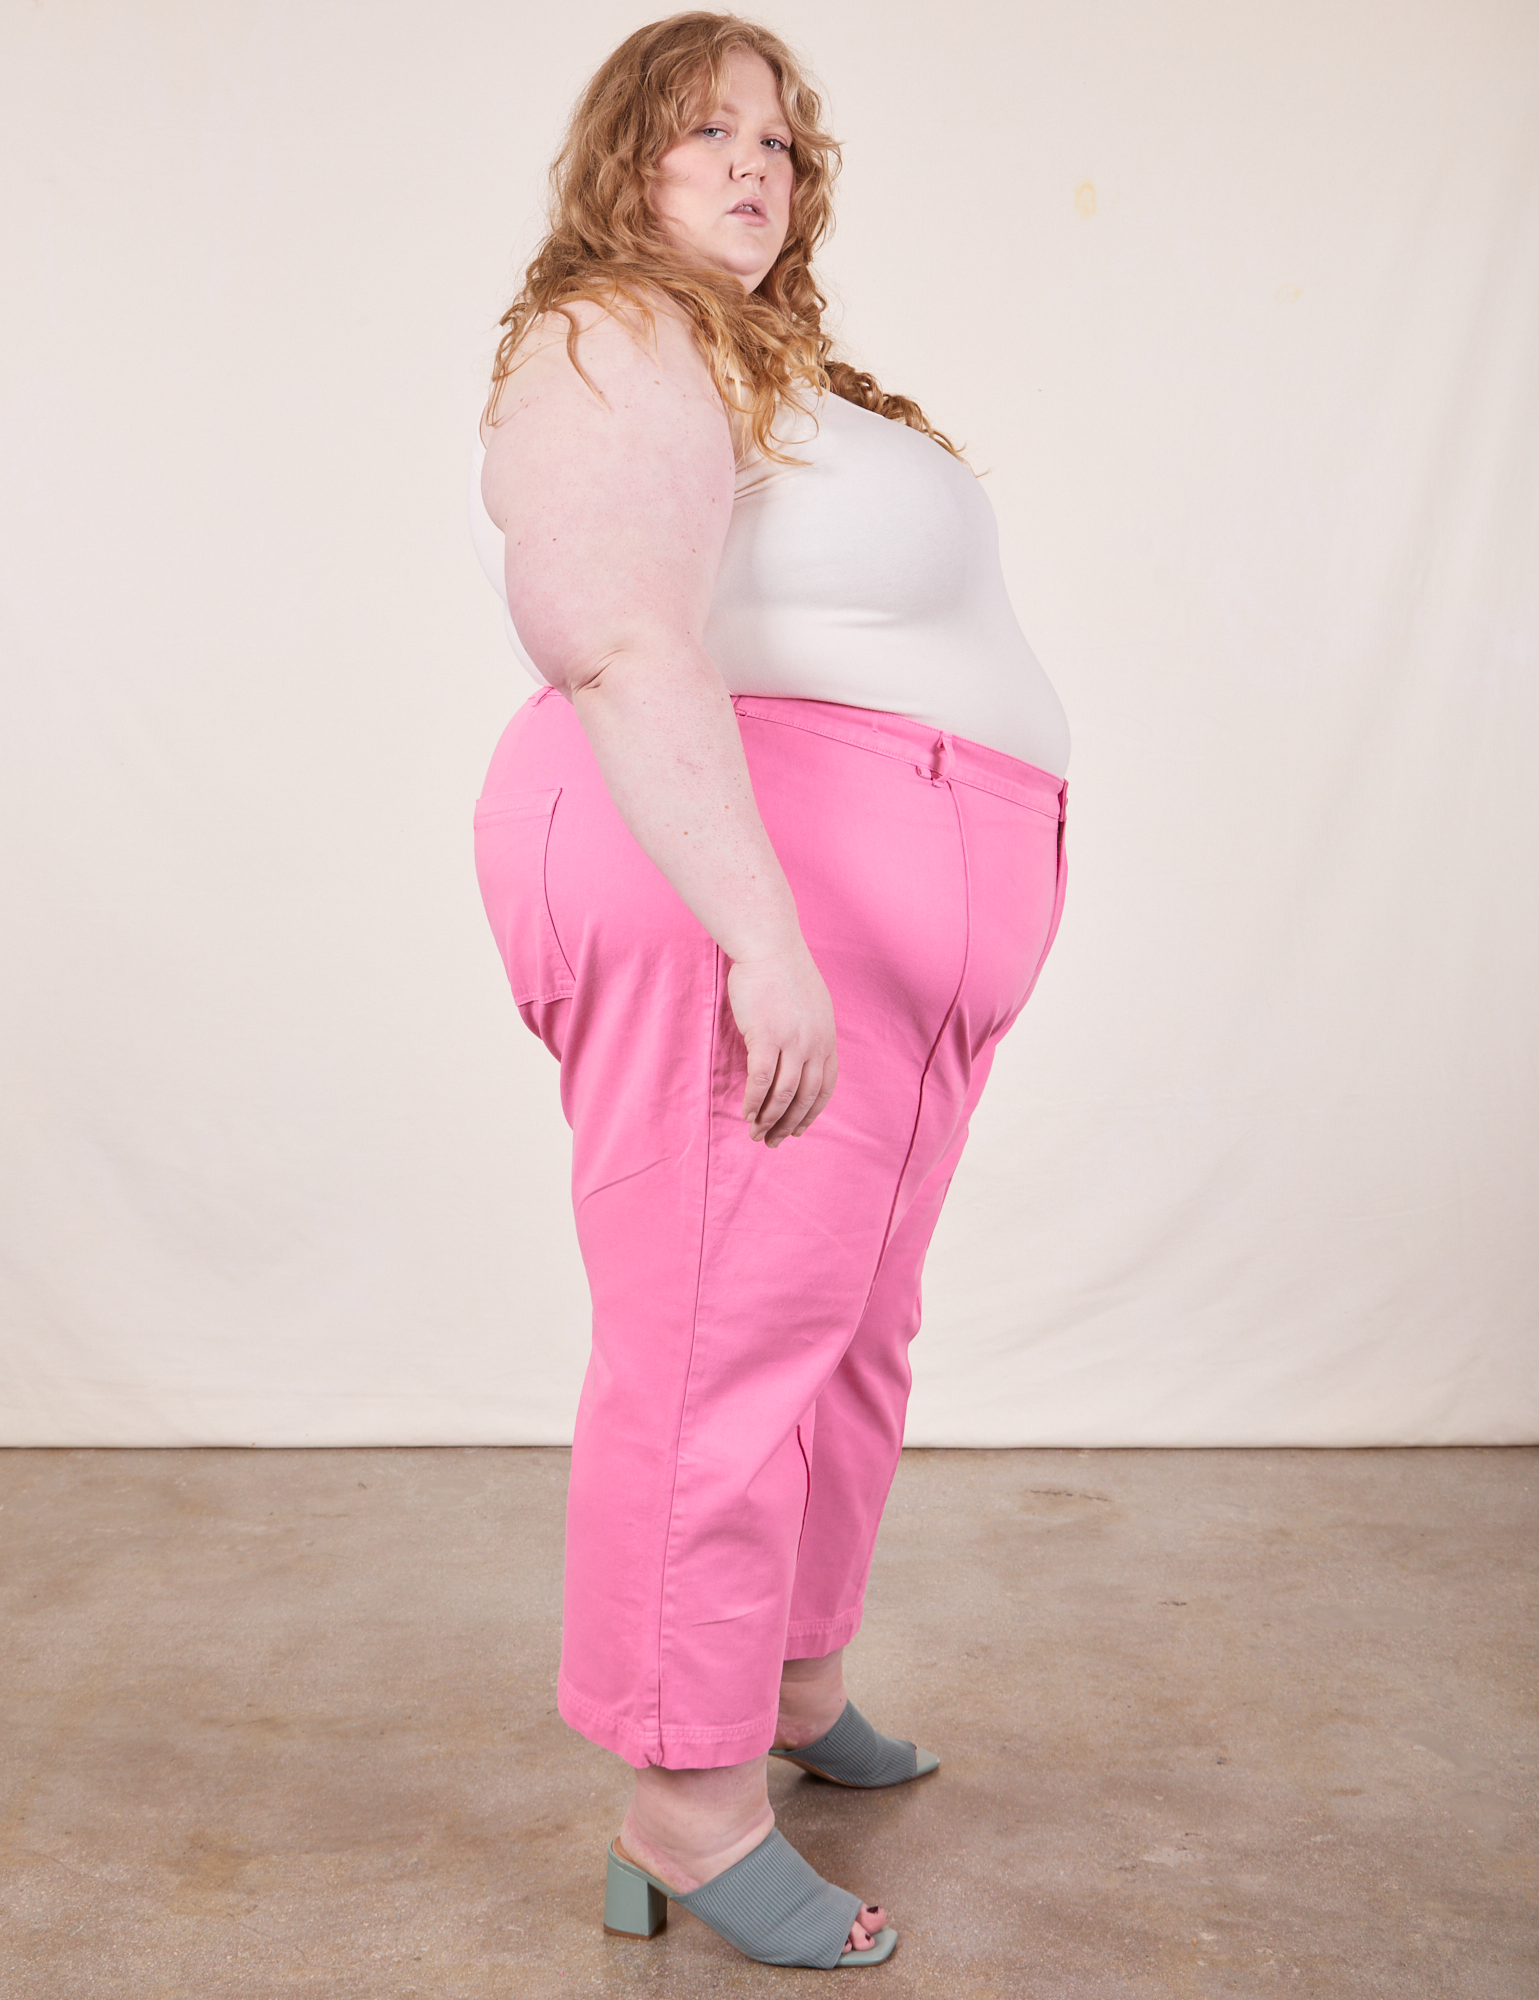 Western Pants in Bubblegum Pink side view on Catie wearing Tank Top in vintage tee off-white